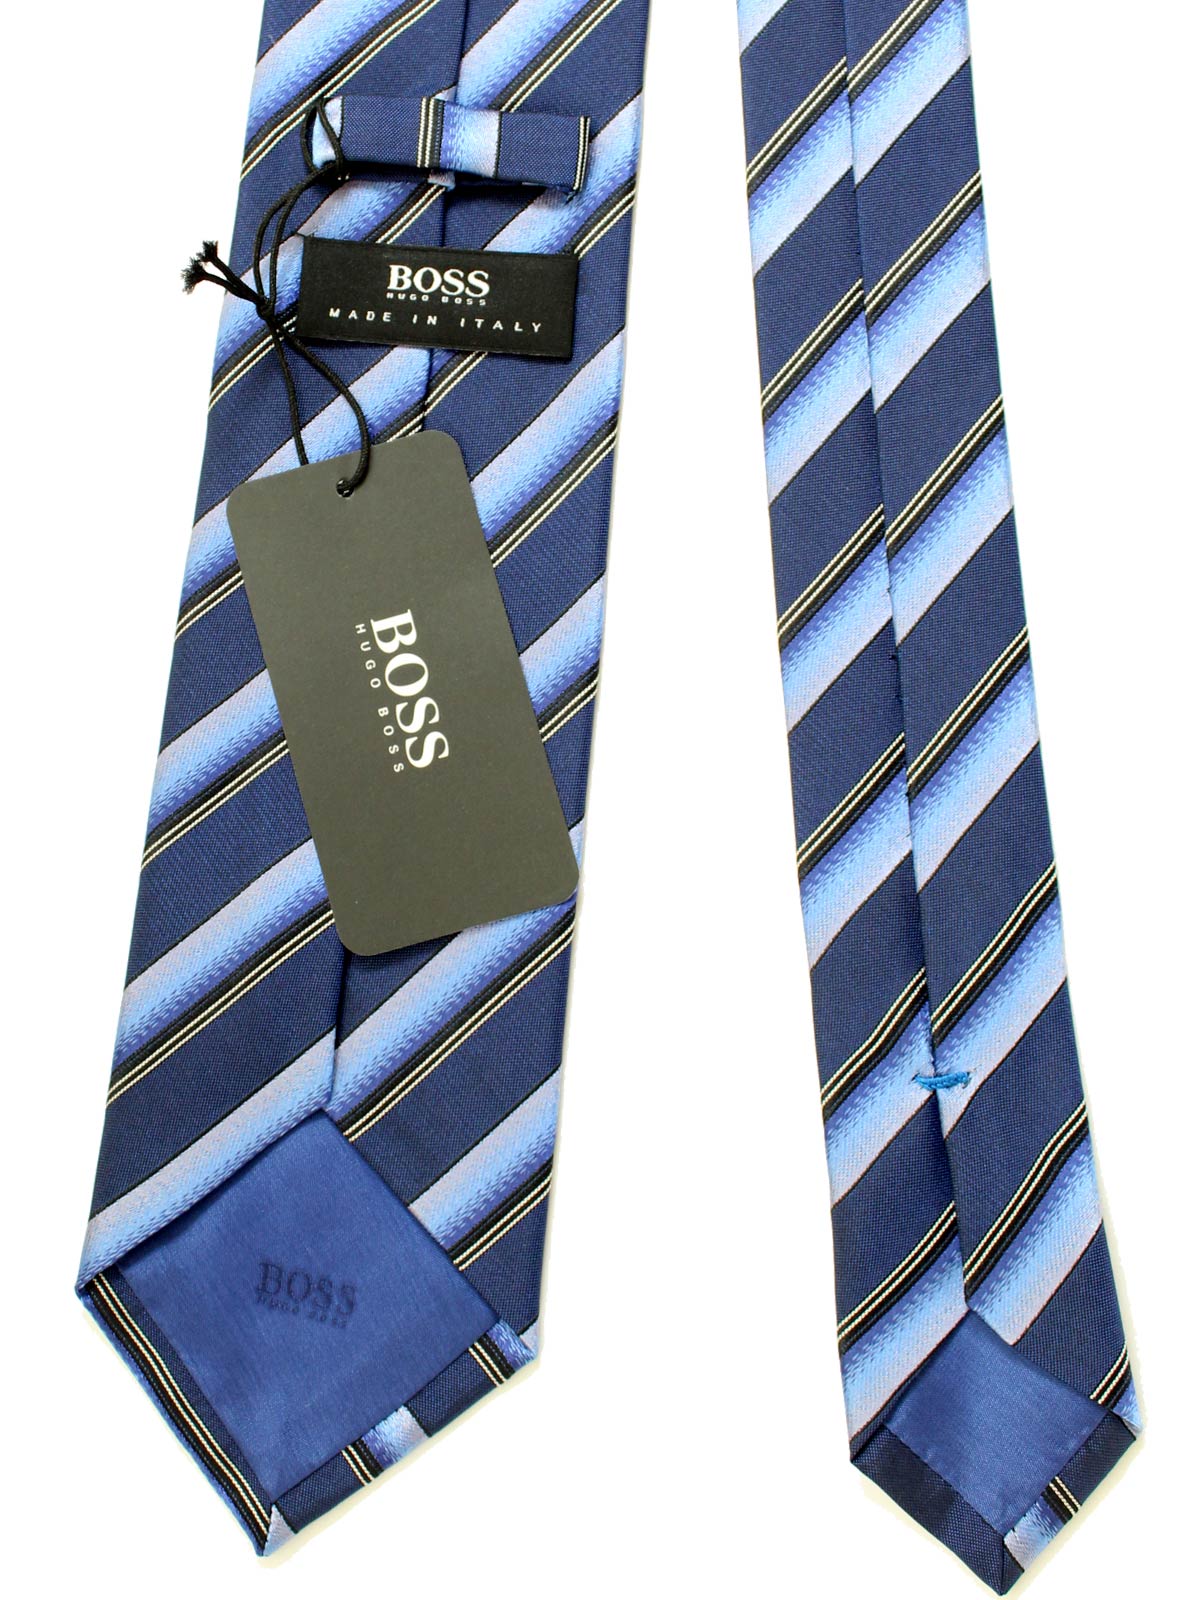 Hugo Boss Tie Navy Blue Stripes - Tie Deals